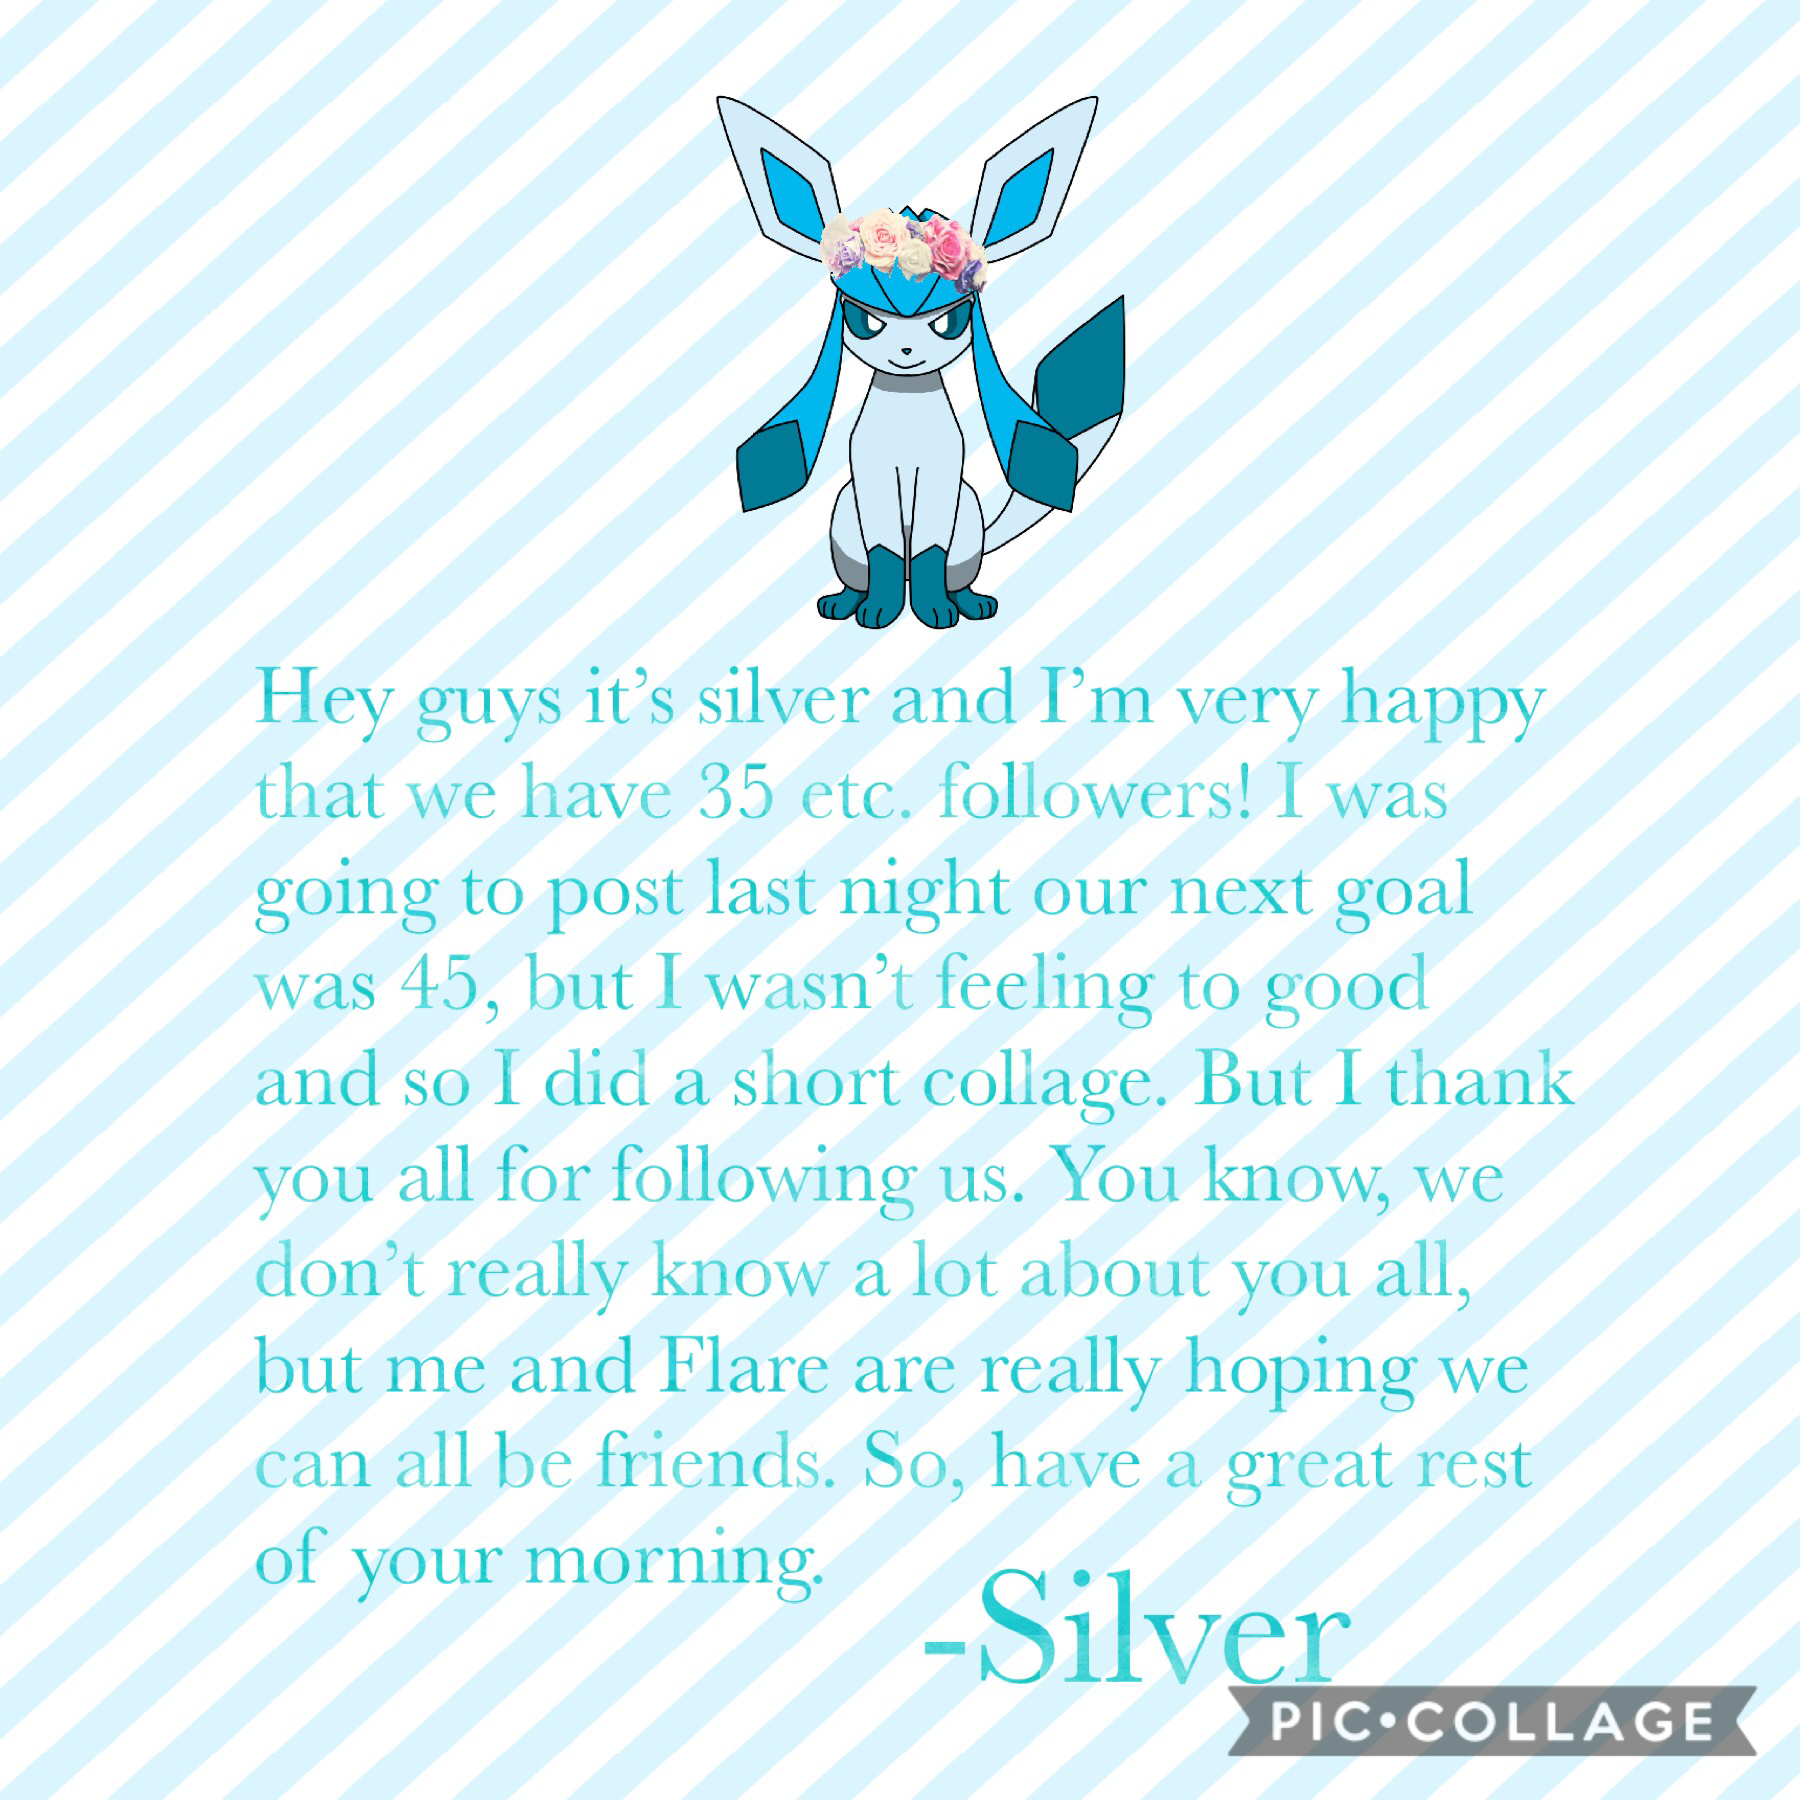 Hey guys it’s Silvers post